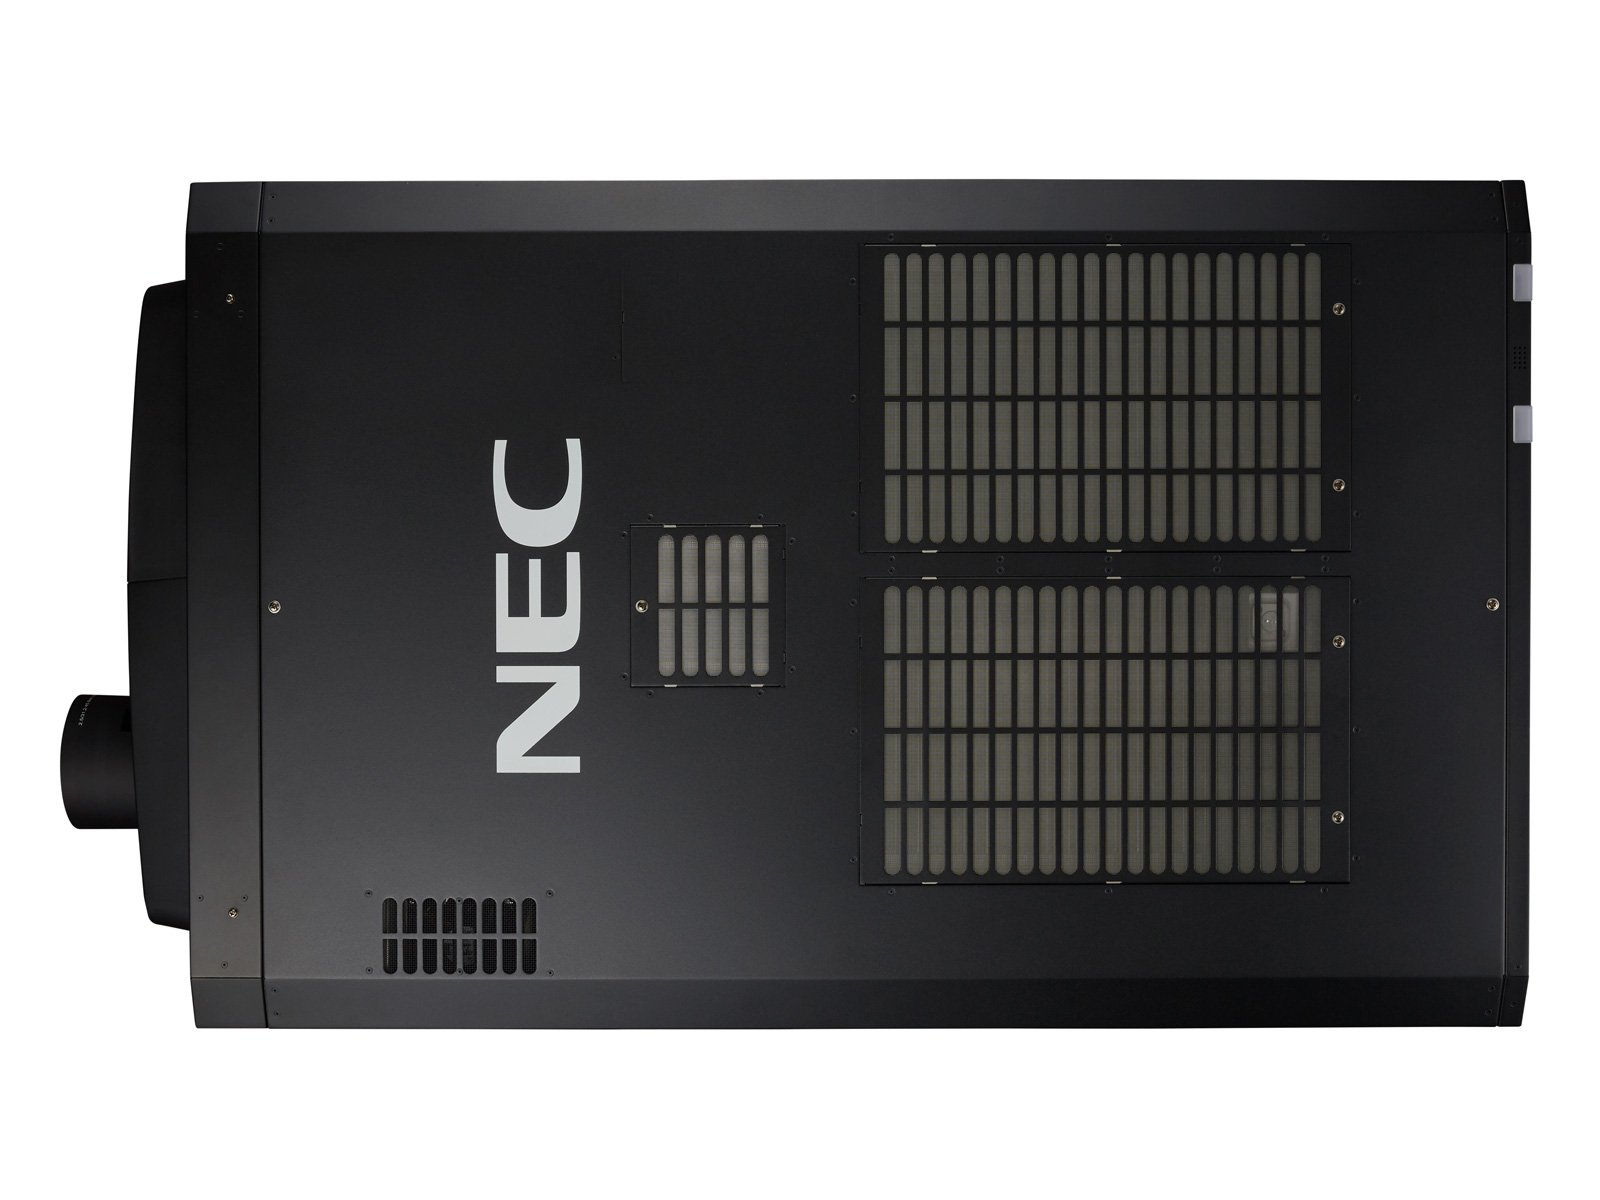 NEC NC2043ML-4K Cinema RB Laser Projector -…